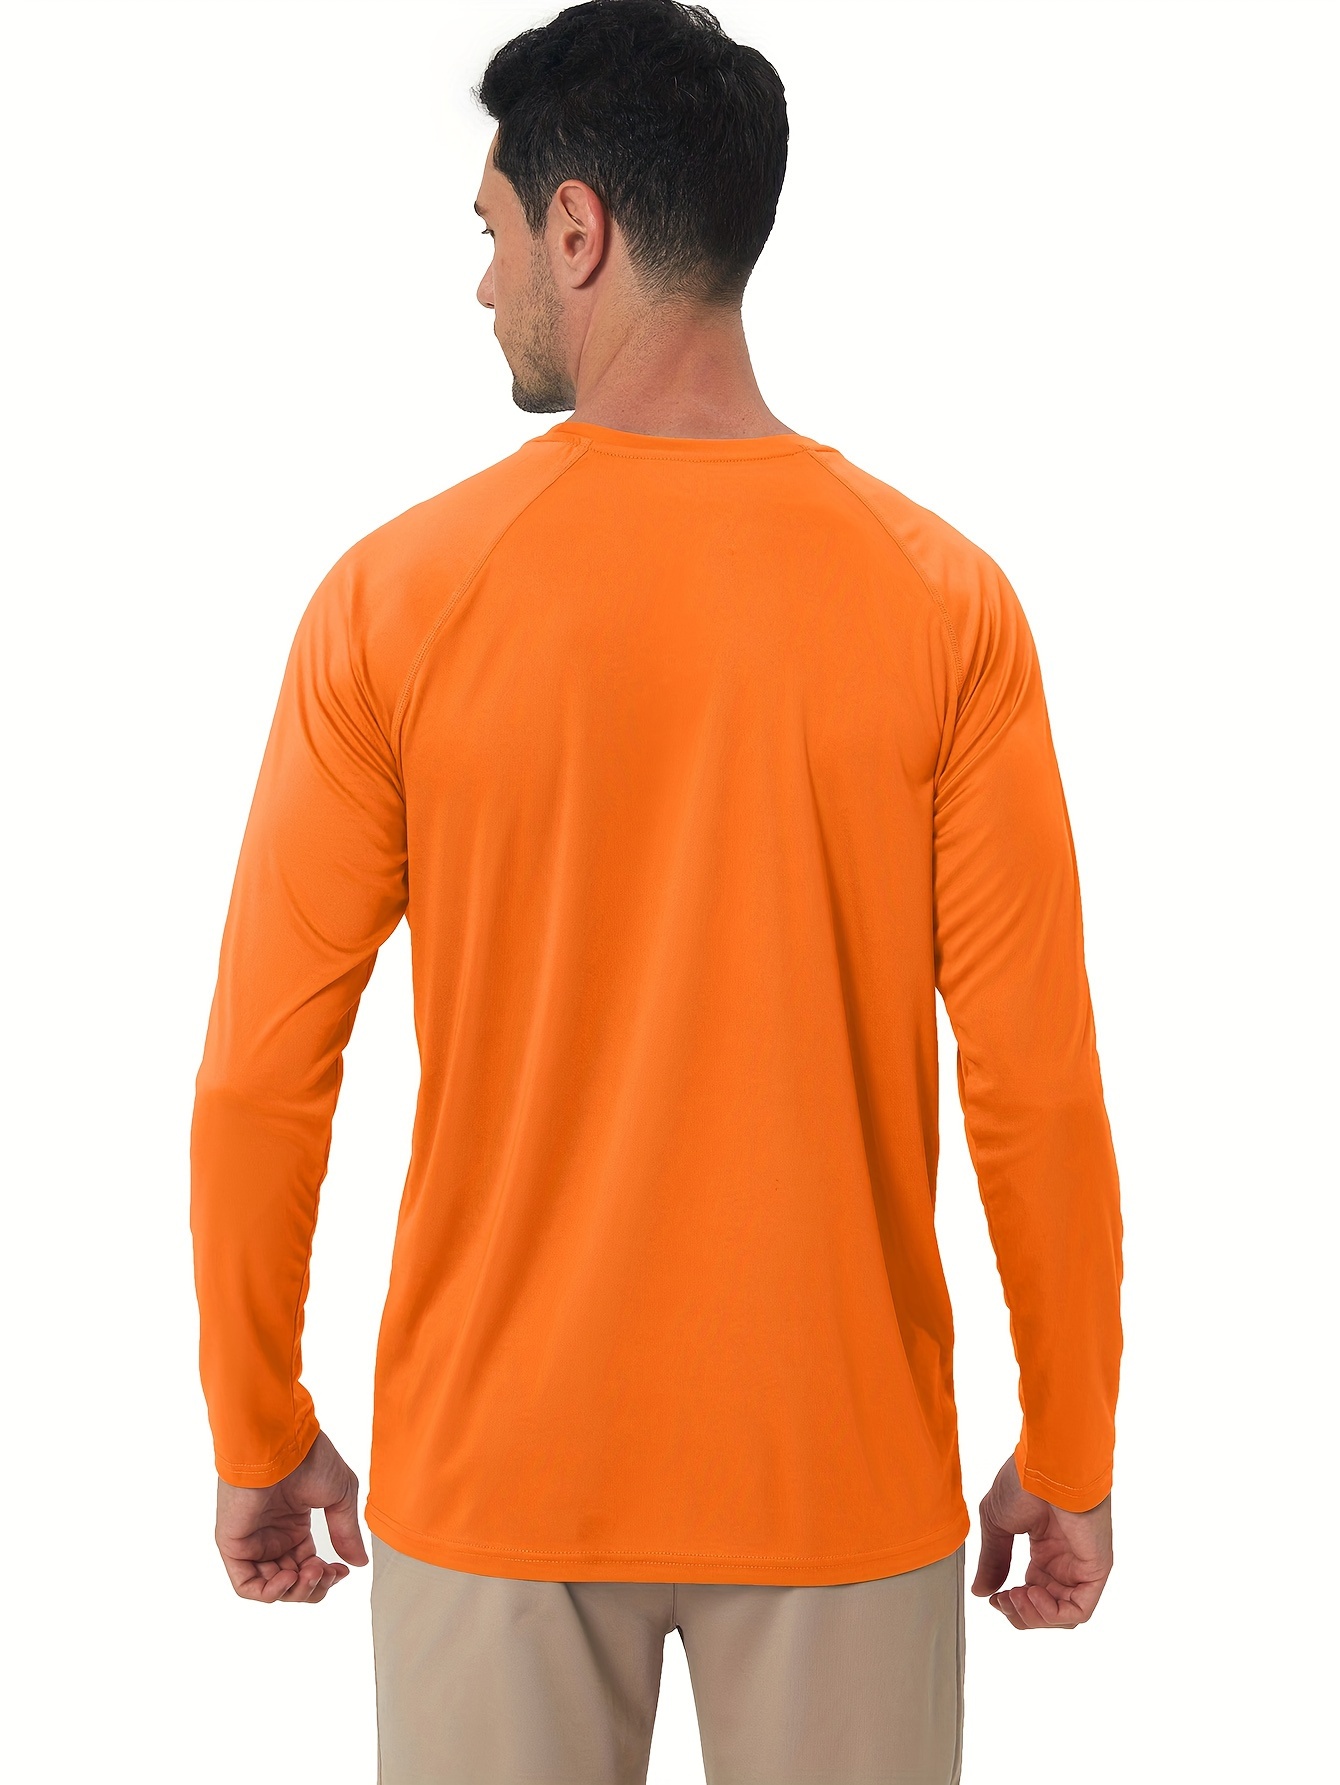 BALEAF Men's Sun Protection Shirts UV SPF T-Shirts UPF 50+ Long Sleeve Rash  Guard Fishing Running Quick Dry Orange Size M in Dubai - UAE